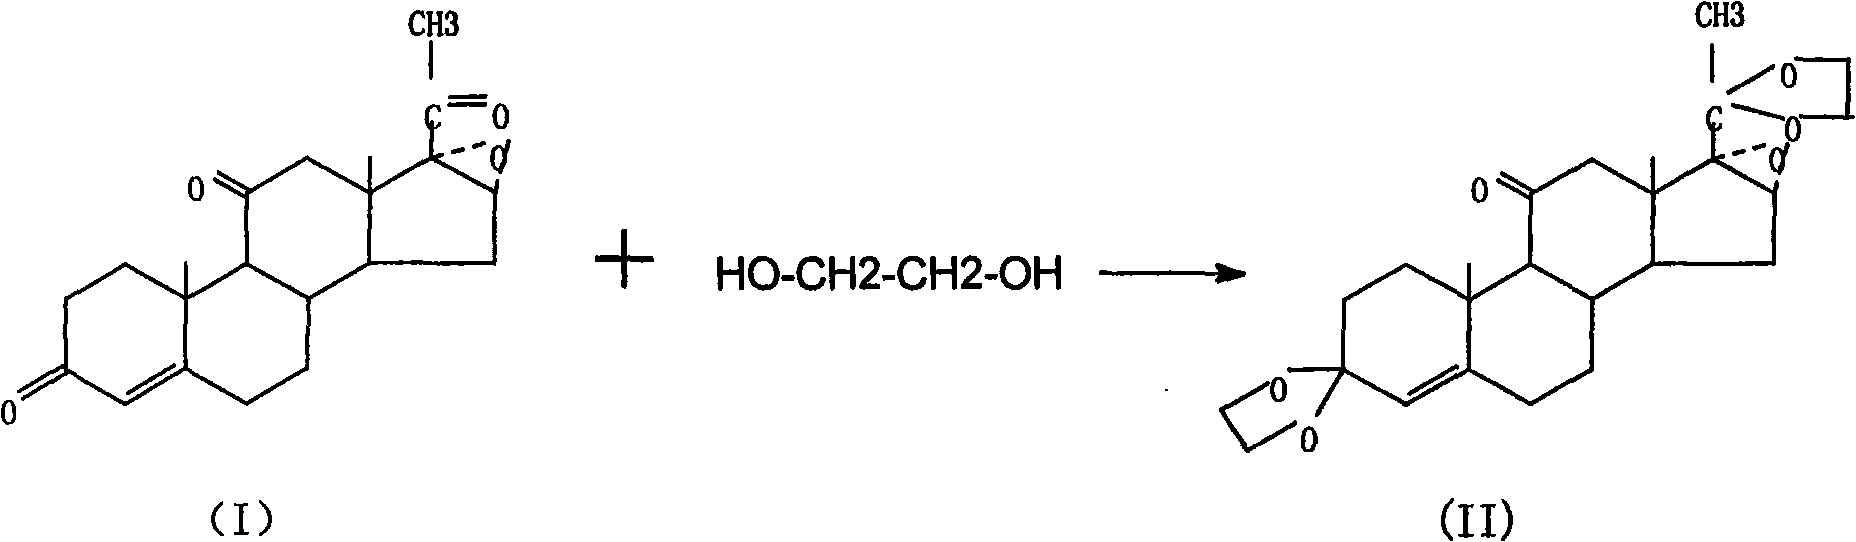 Process method for producing intermediate 3,20-diethylene glycol of betamethasone serial products